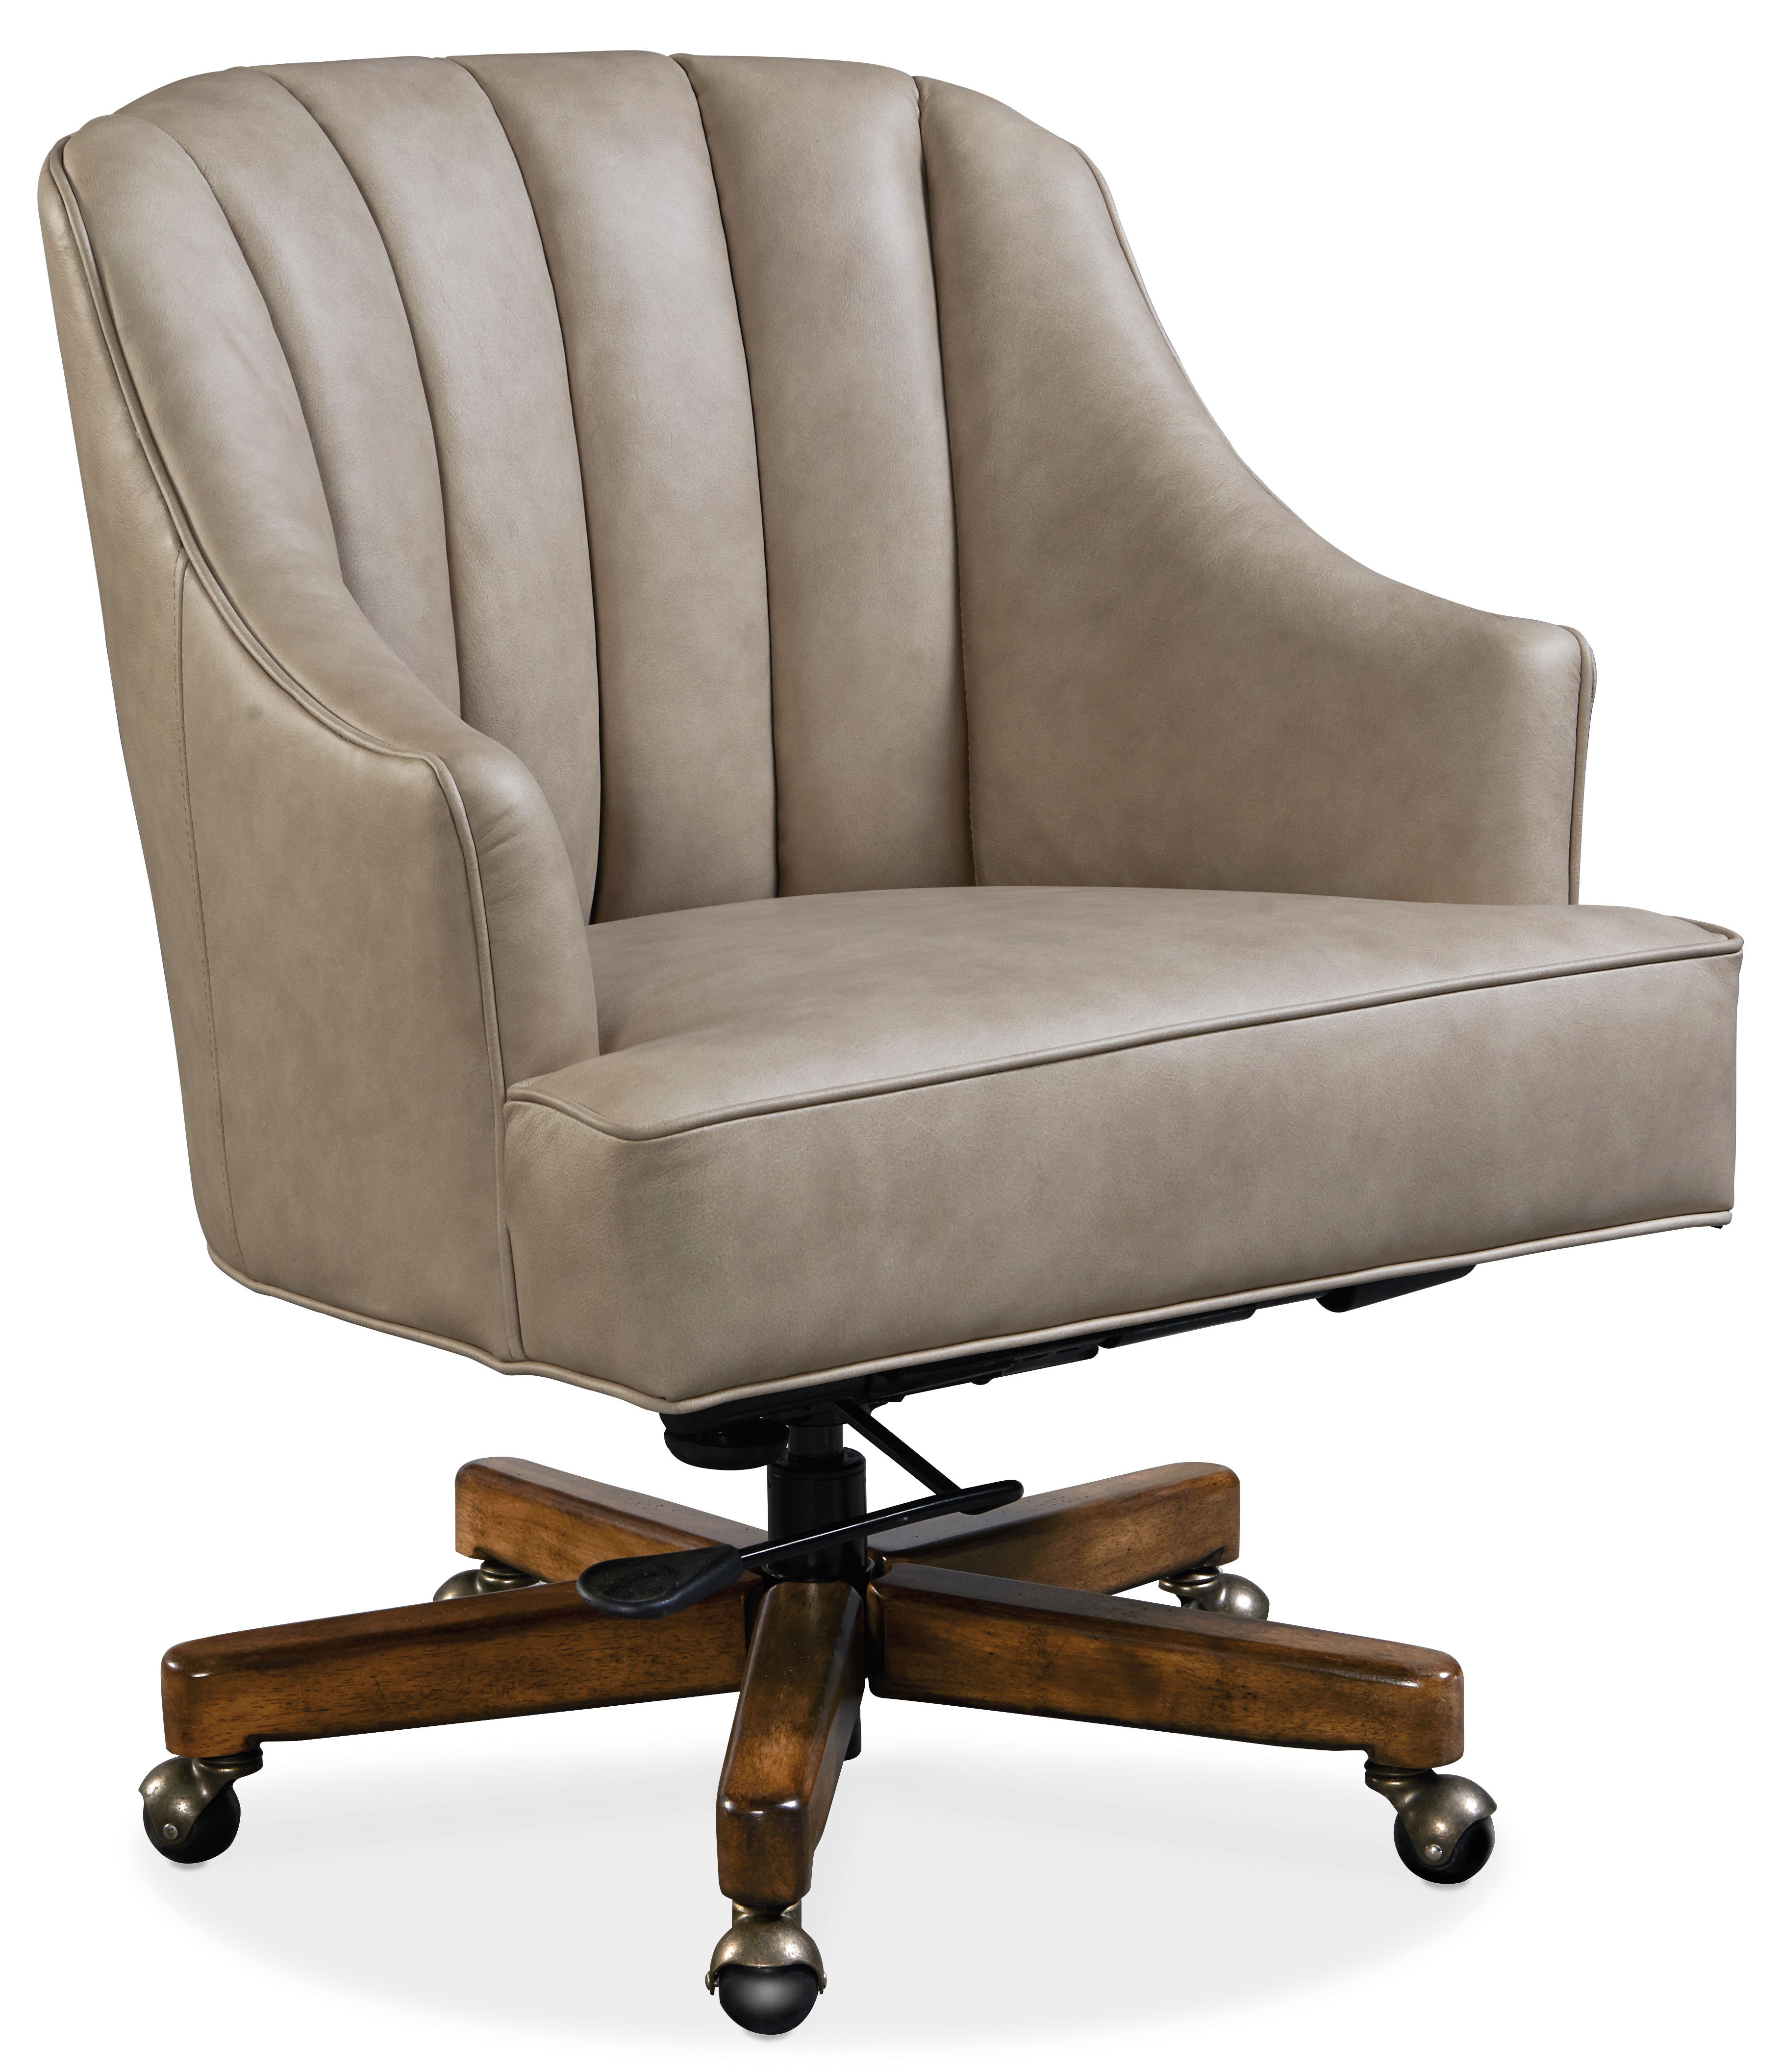 Hooker Furniture Home Office Haider Executive Swivel Tilt Chair 